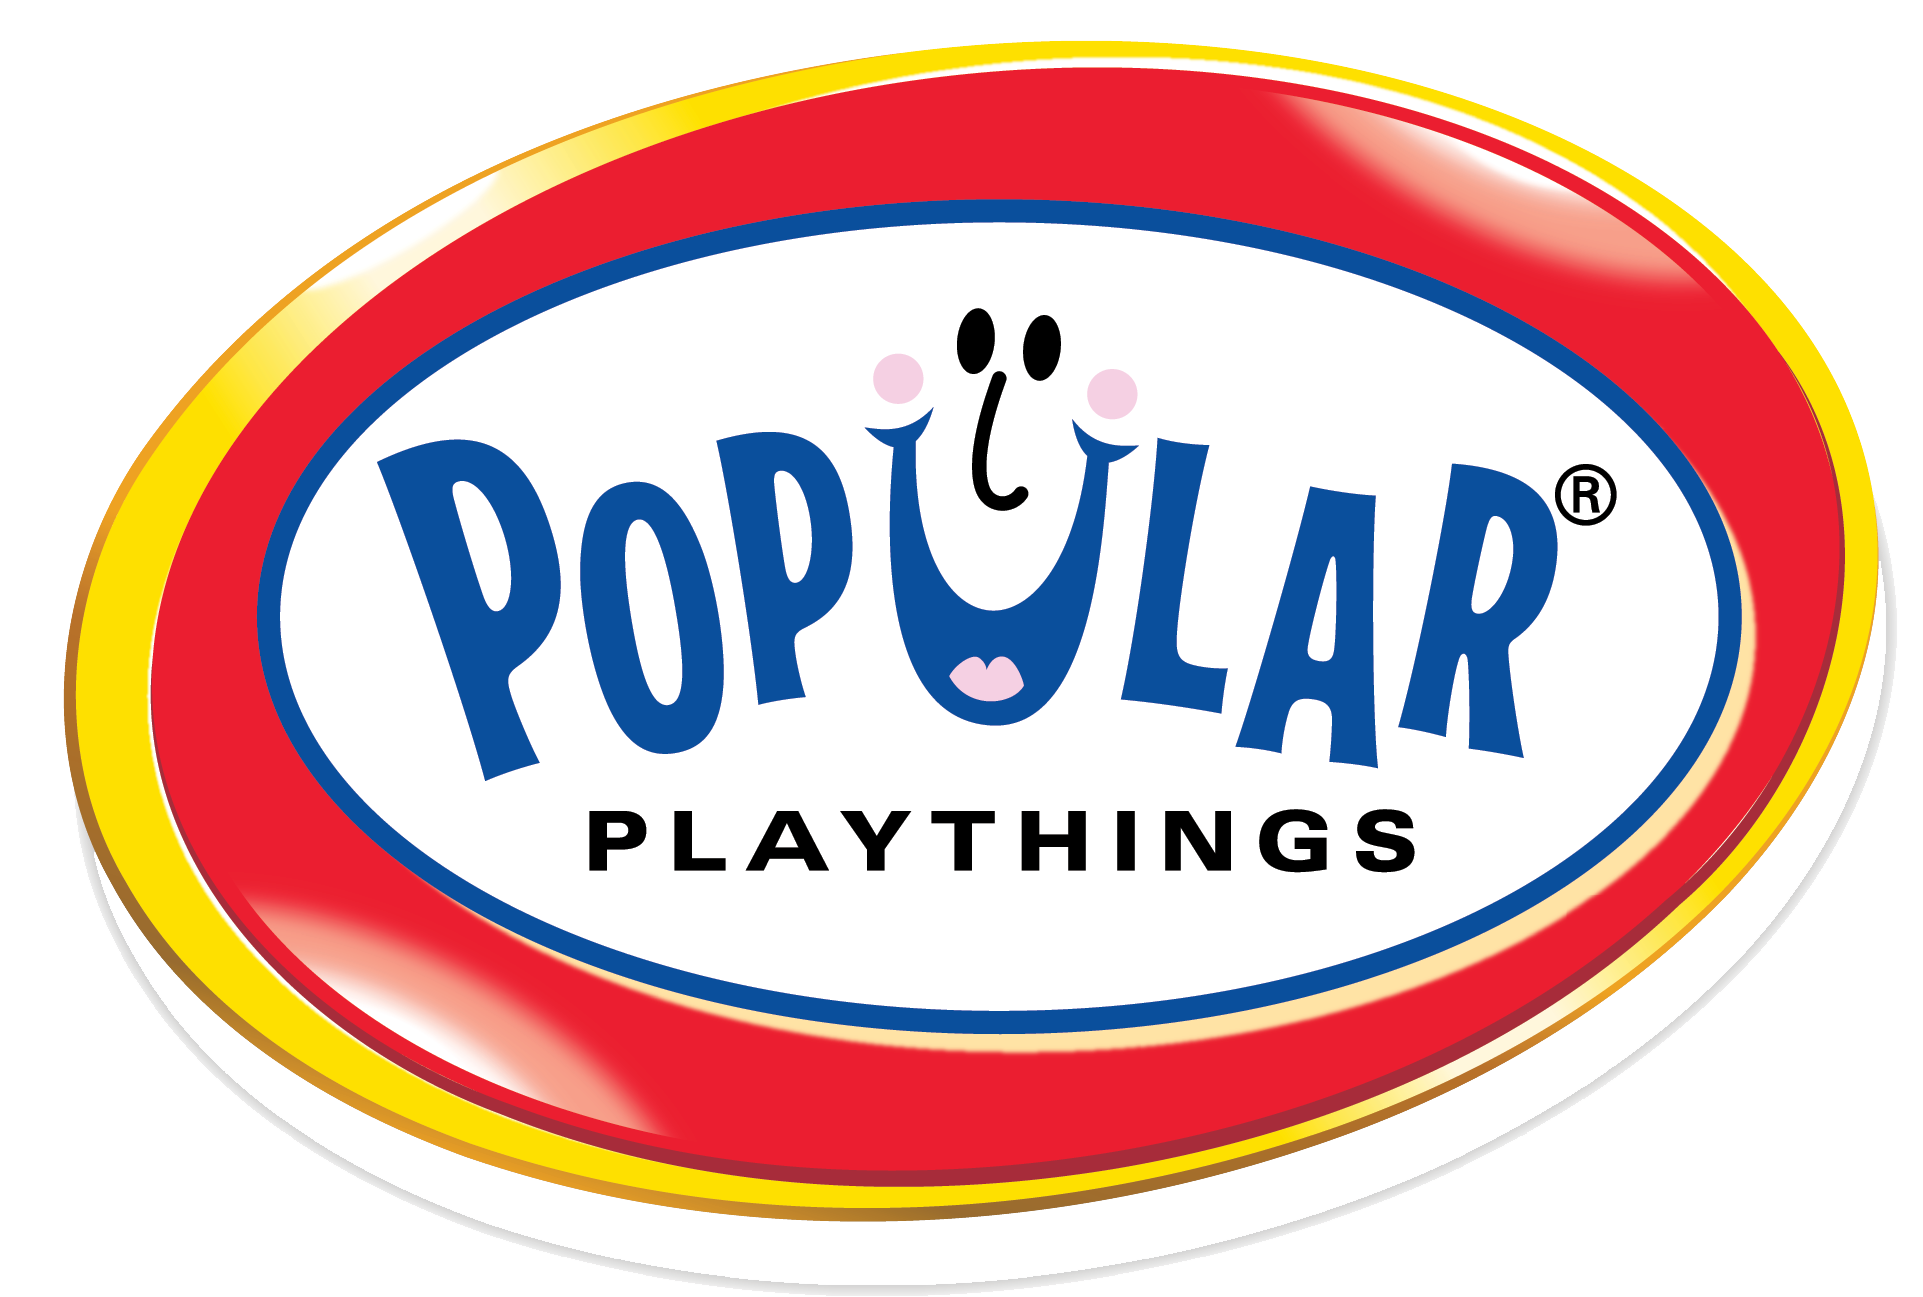 Popular Playthings (Huntar Company)